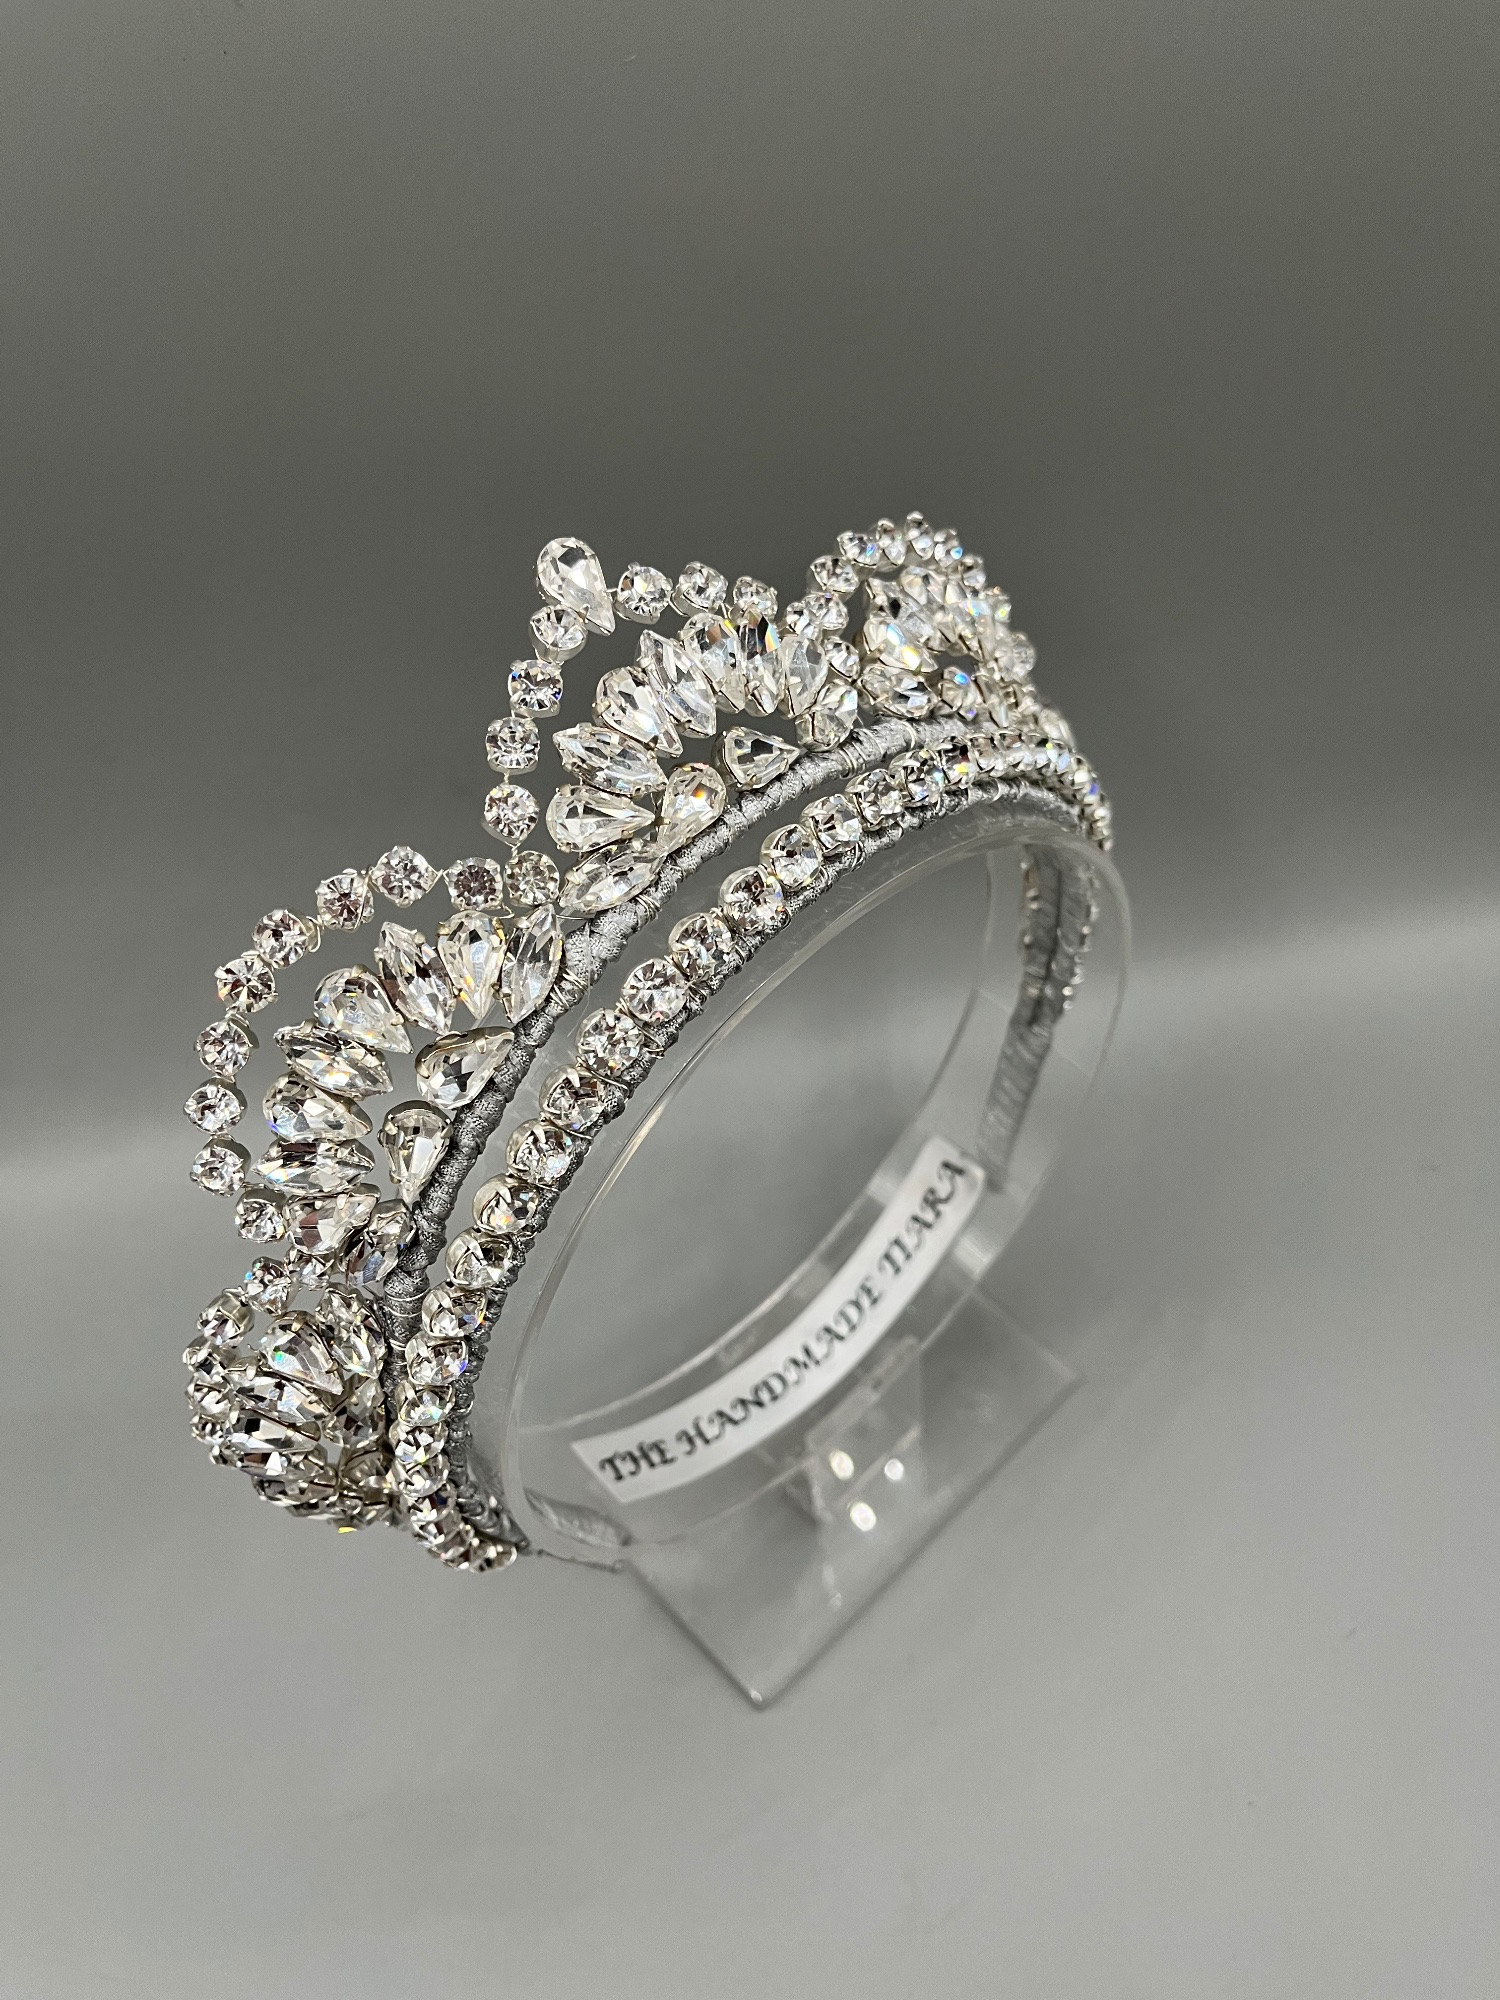 Regal inspired silver crystal bridal crown, art deco inspired tiara